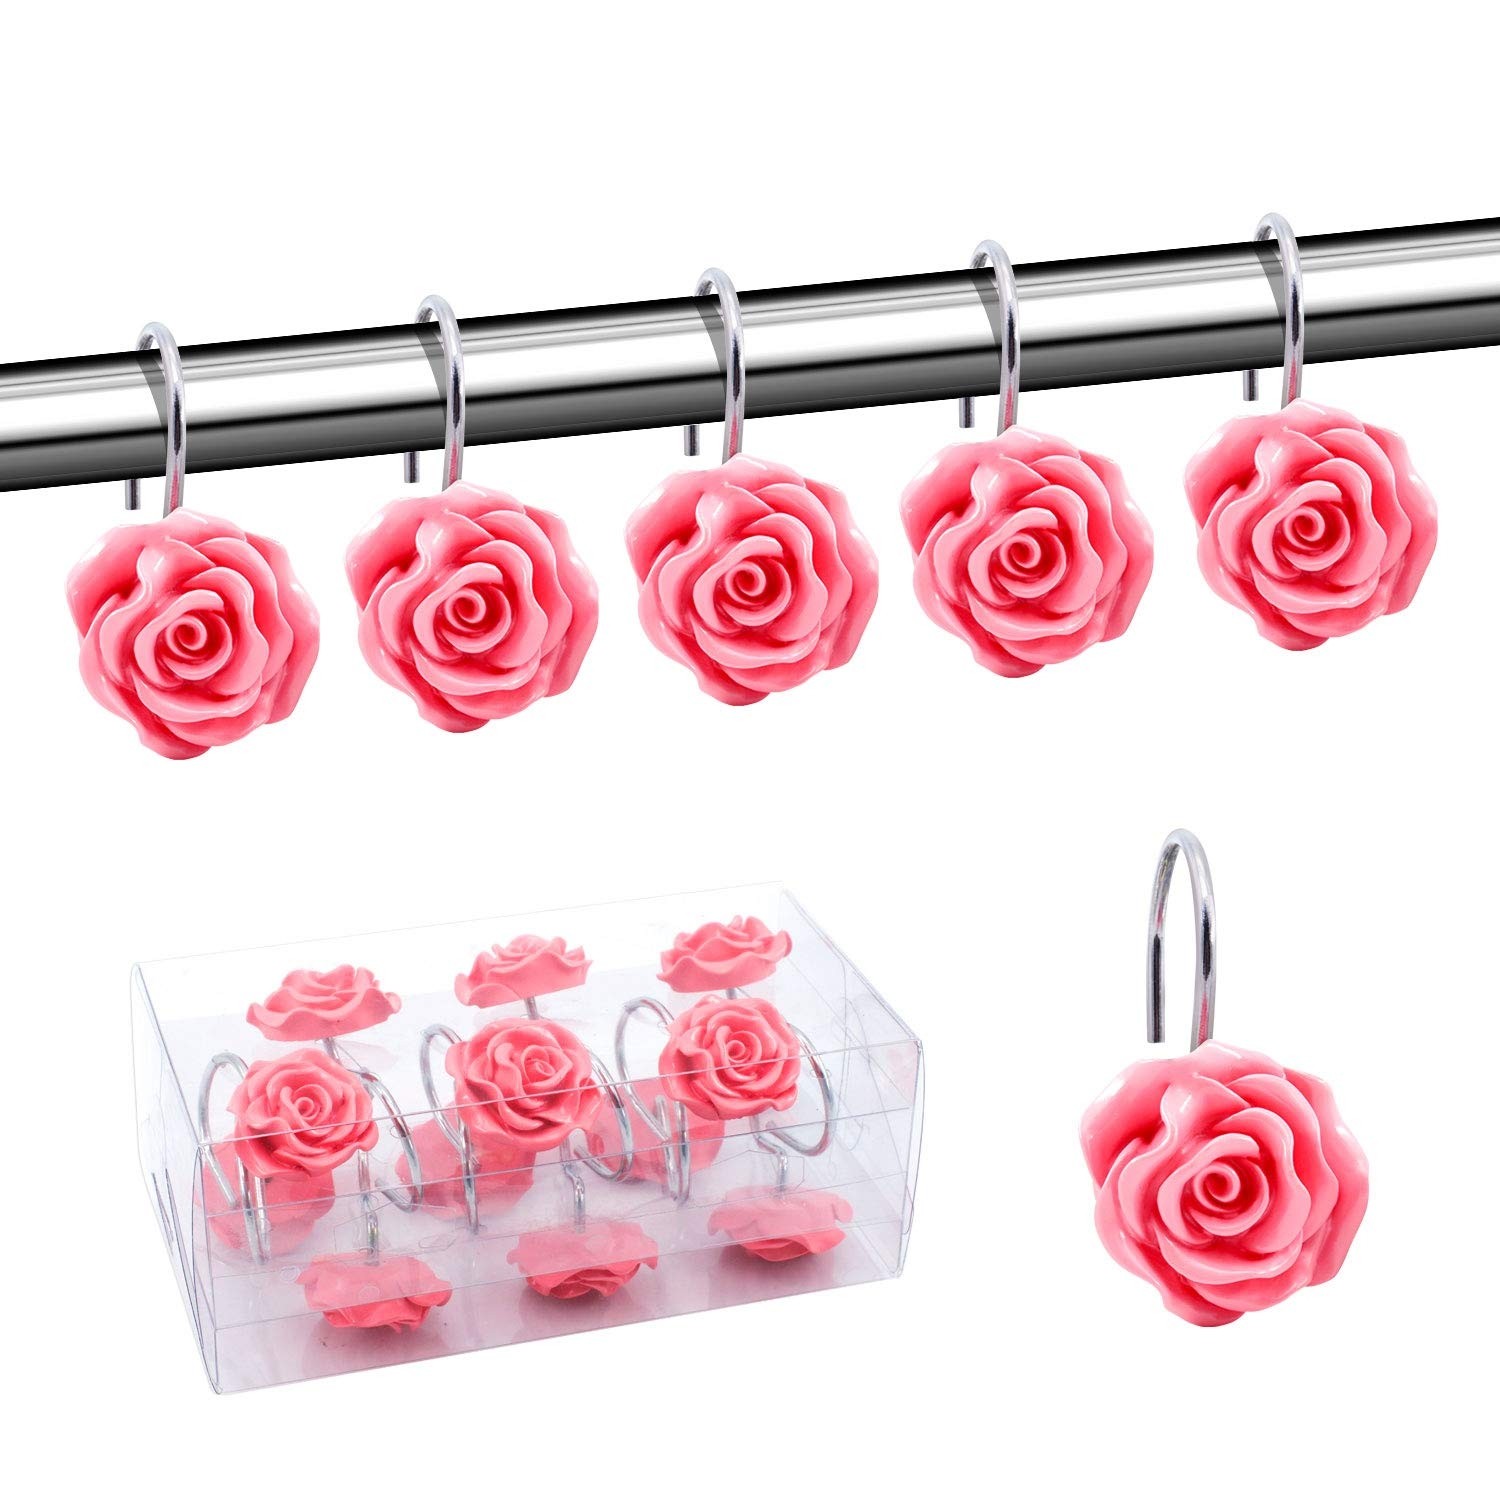 New 12 PCS Fashion Decorative Home Bathroom Rose Shower Curtain Hooks 